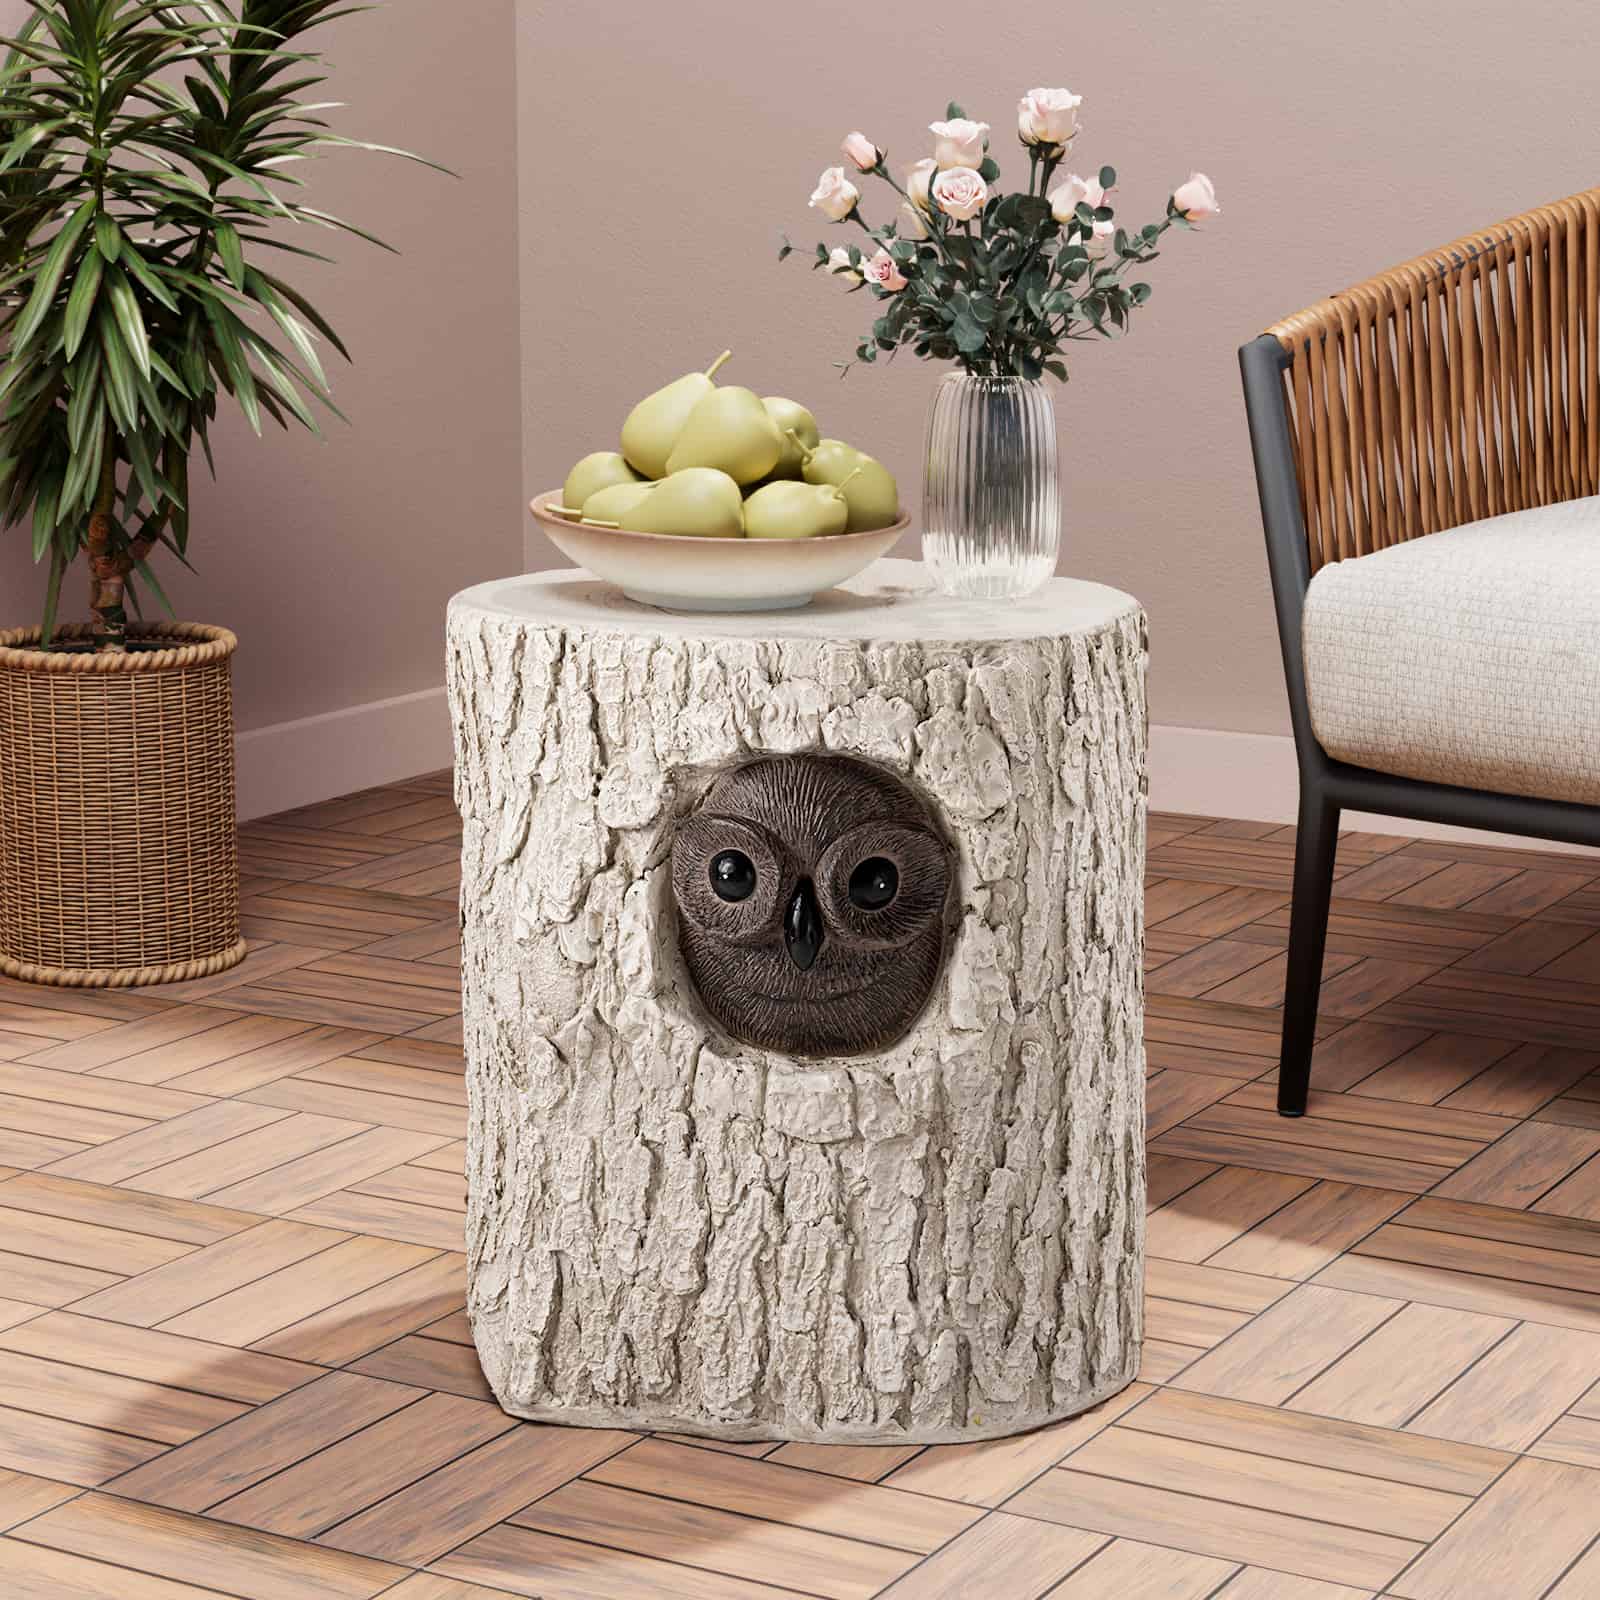 Pine Owl Stump Side Table